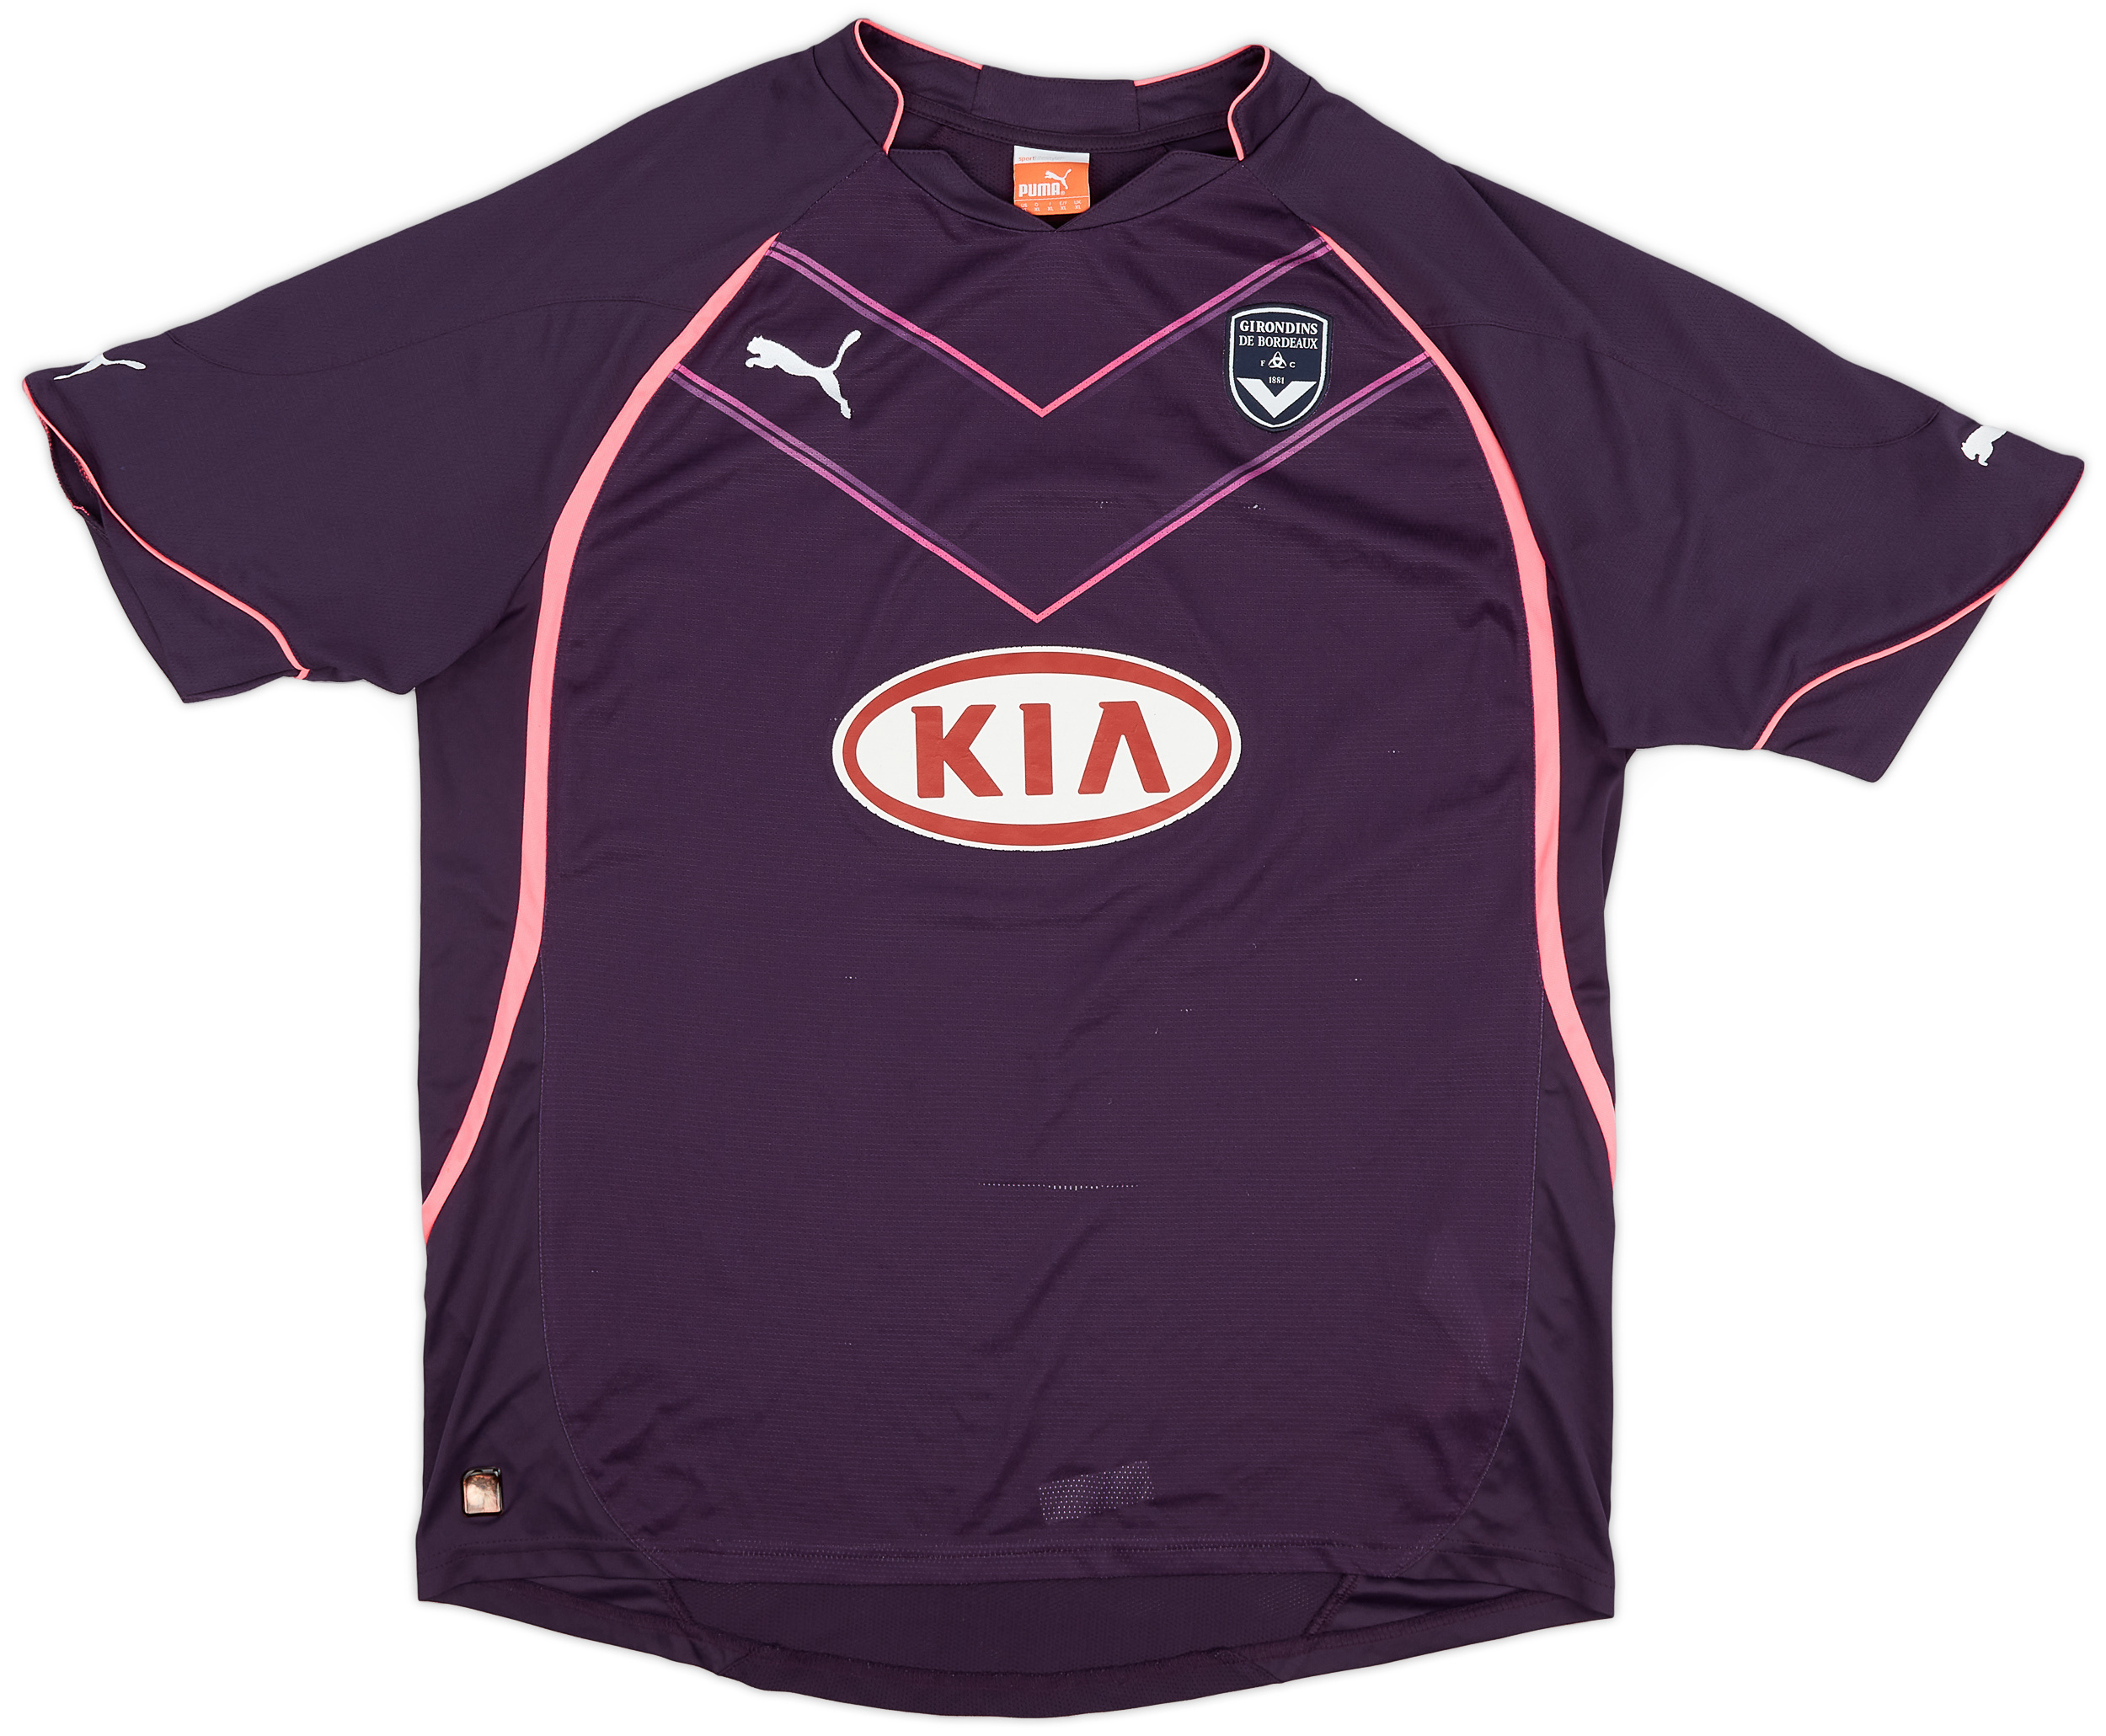 2010-11 Bordeaux Third Shirt - 5/10 - ()